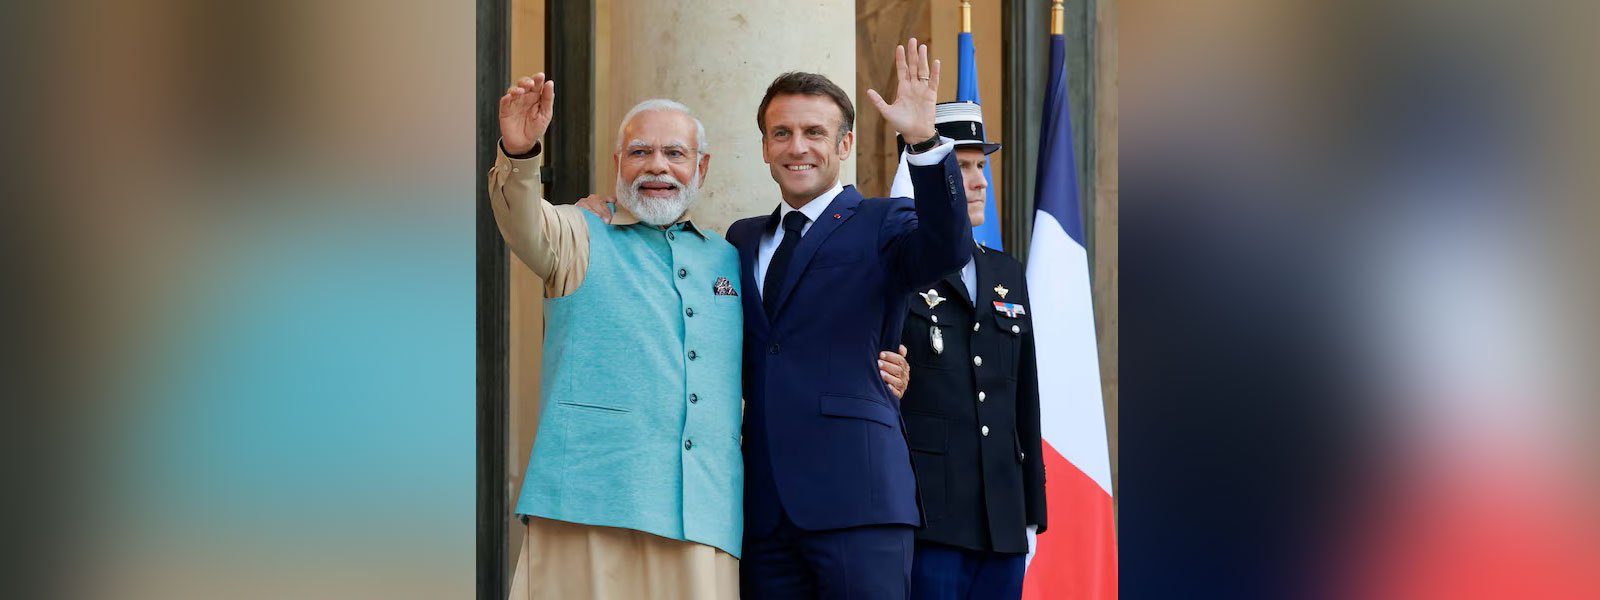 Historical visit of Prime Minister Shri Narendra Modi in Paris, France on 13-14 July 2023. PM Modi participated in Bastille Day celebration as the Guest of Honour